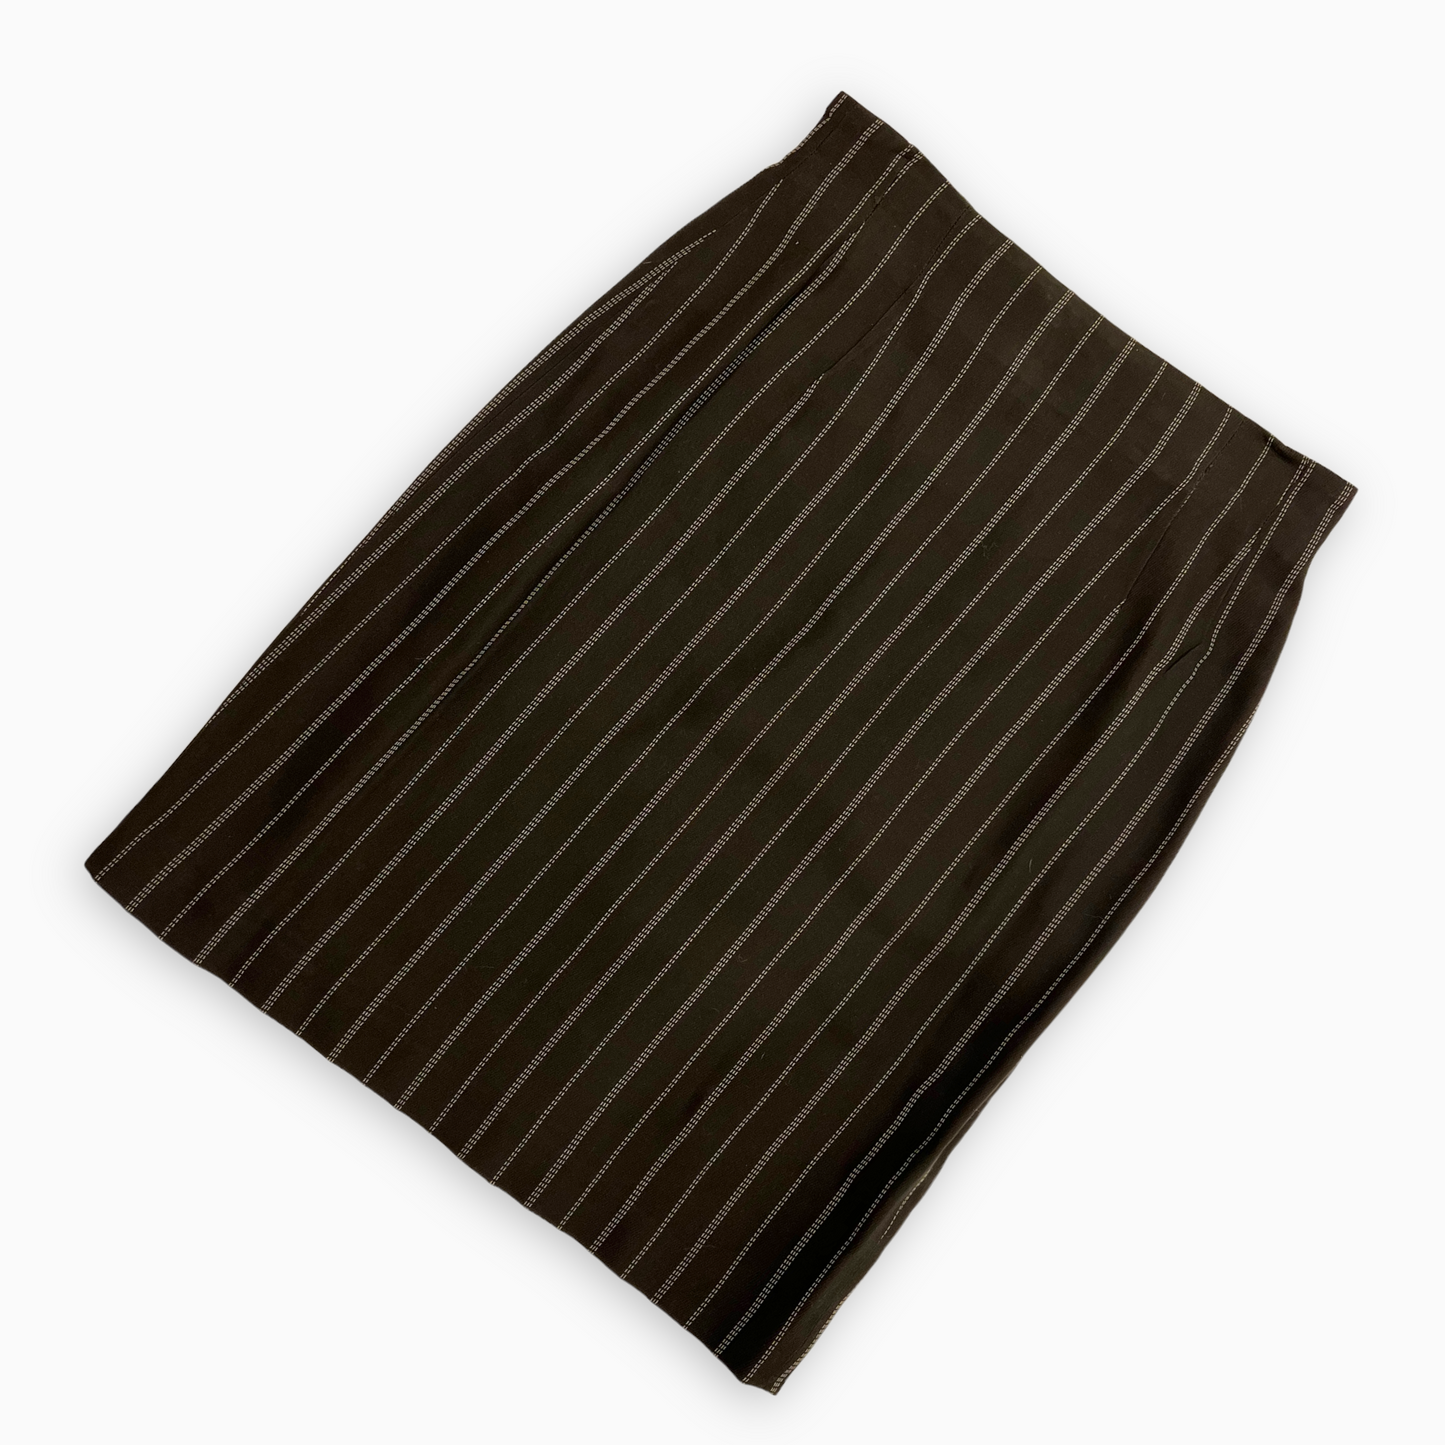 Emmanuel Ungaro Pinstriped Skirt Suit